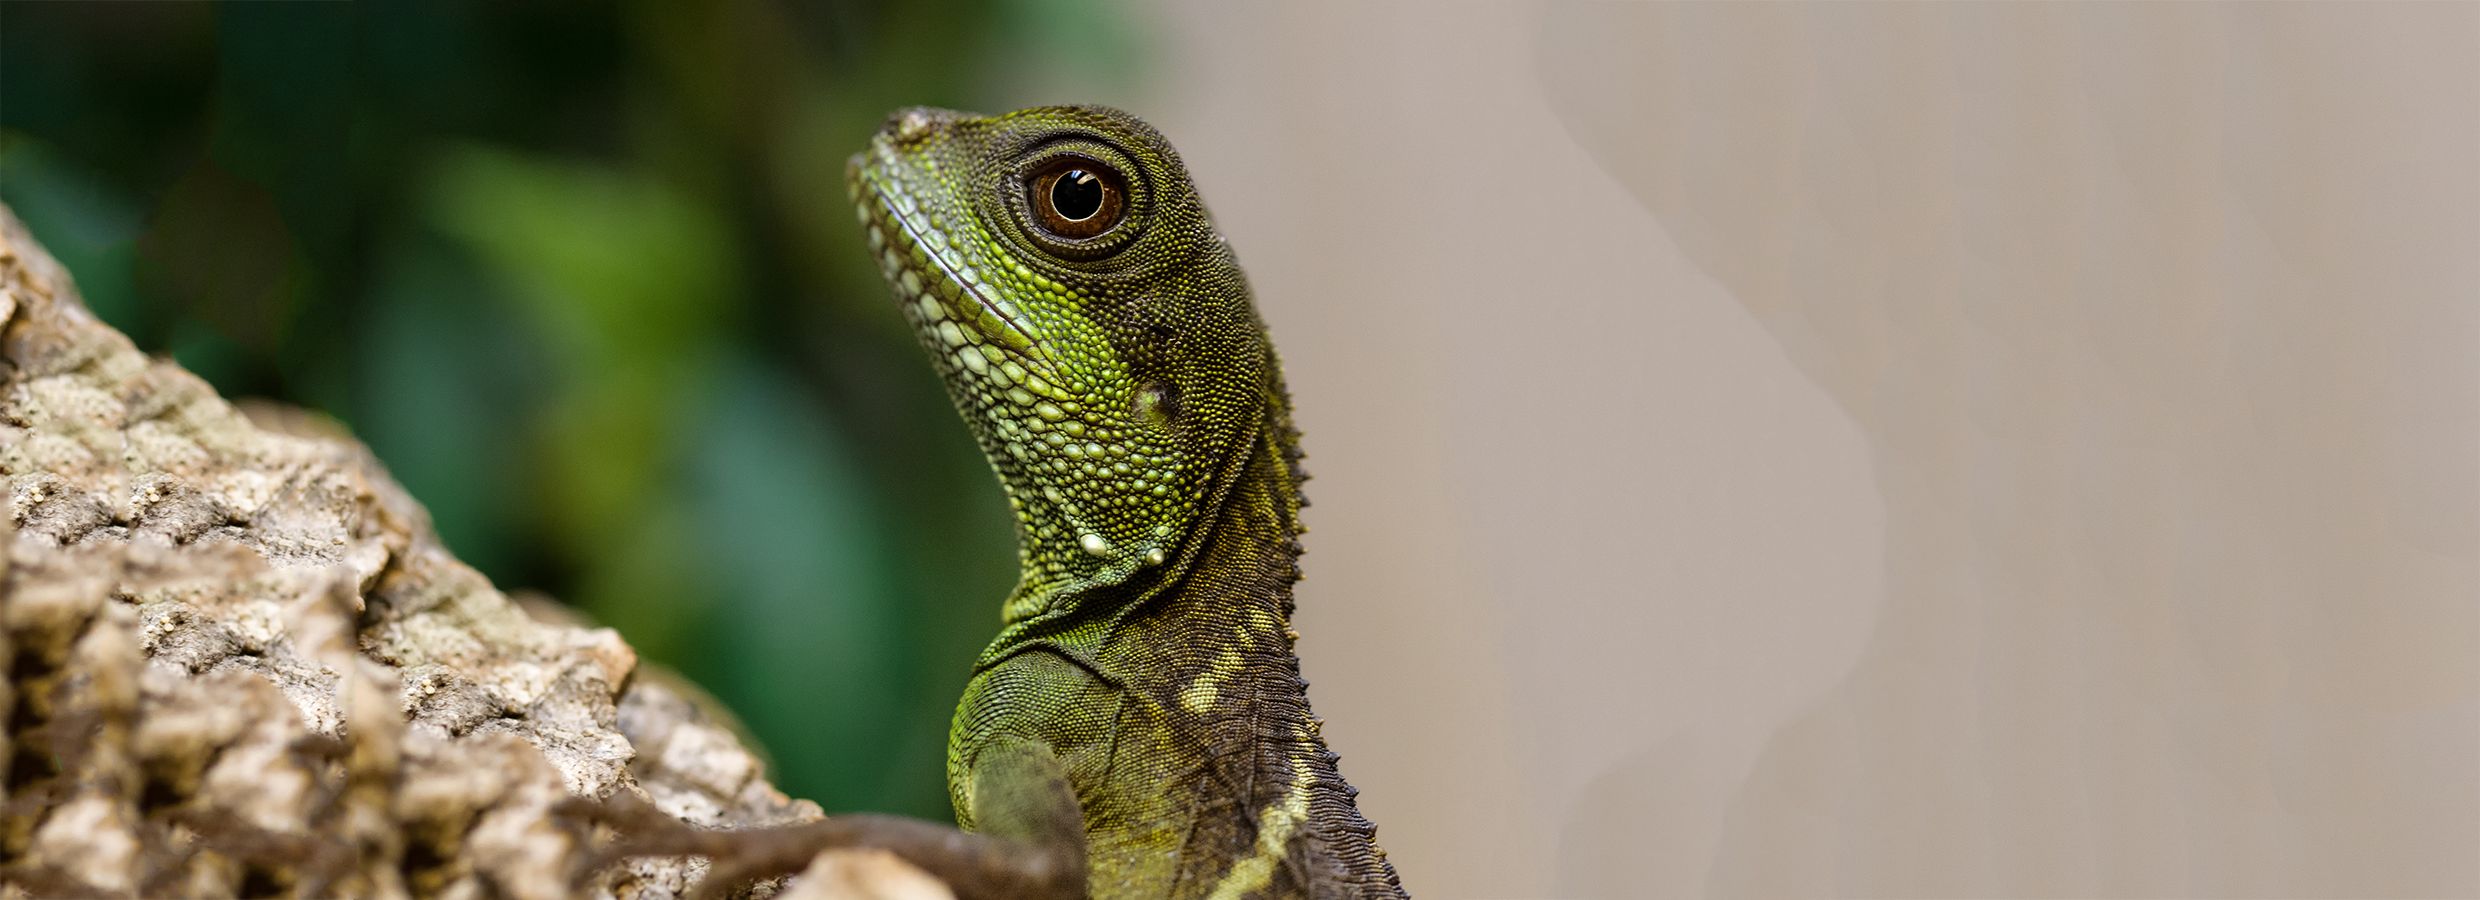 Cool Reptiles: 7 Best Pet Lizards & Snakes | PetSmart